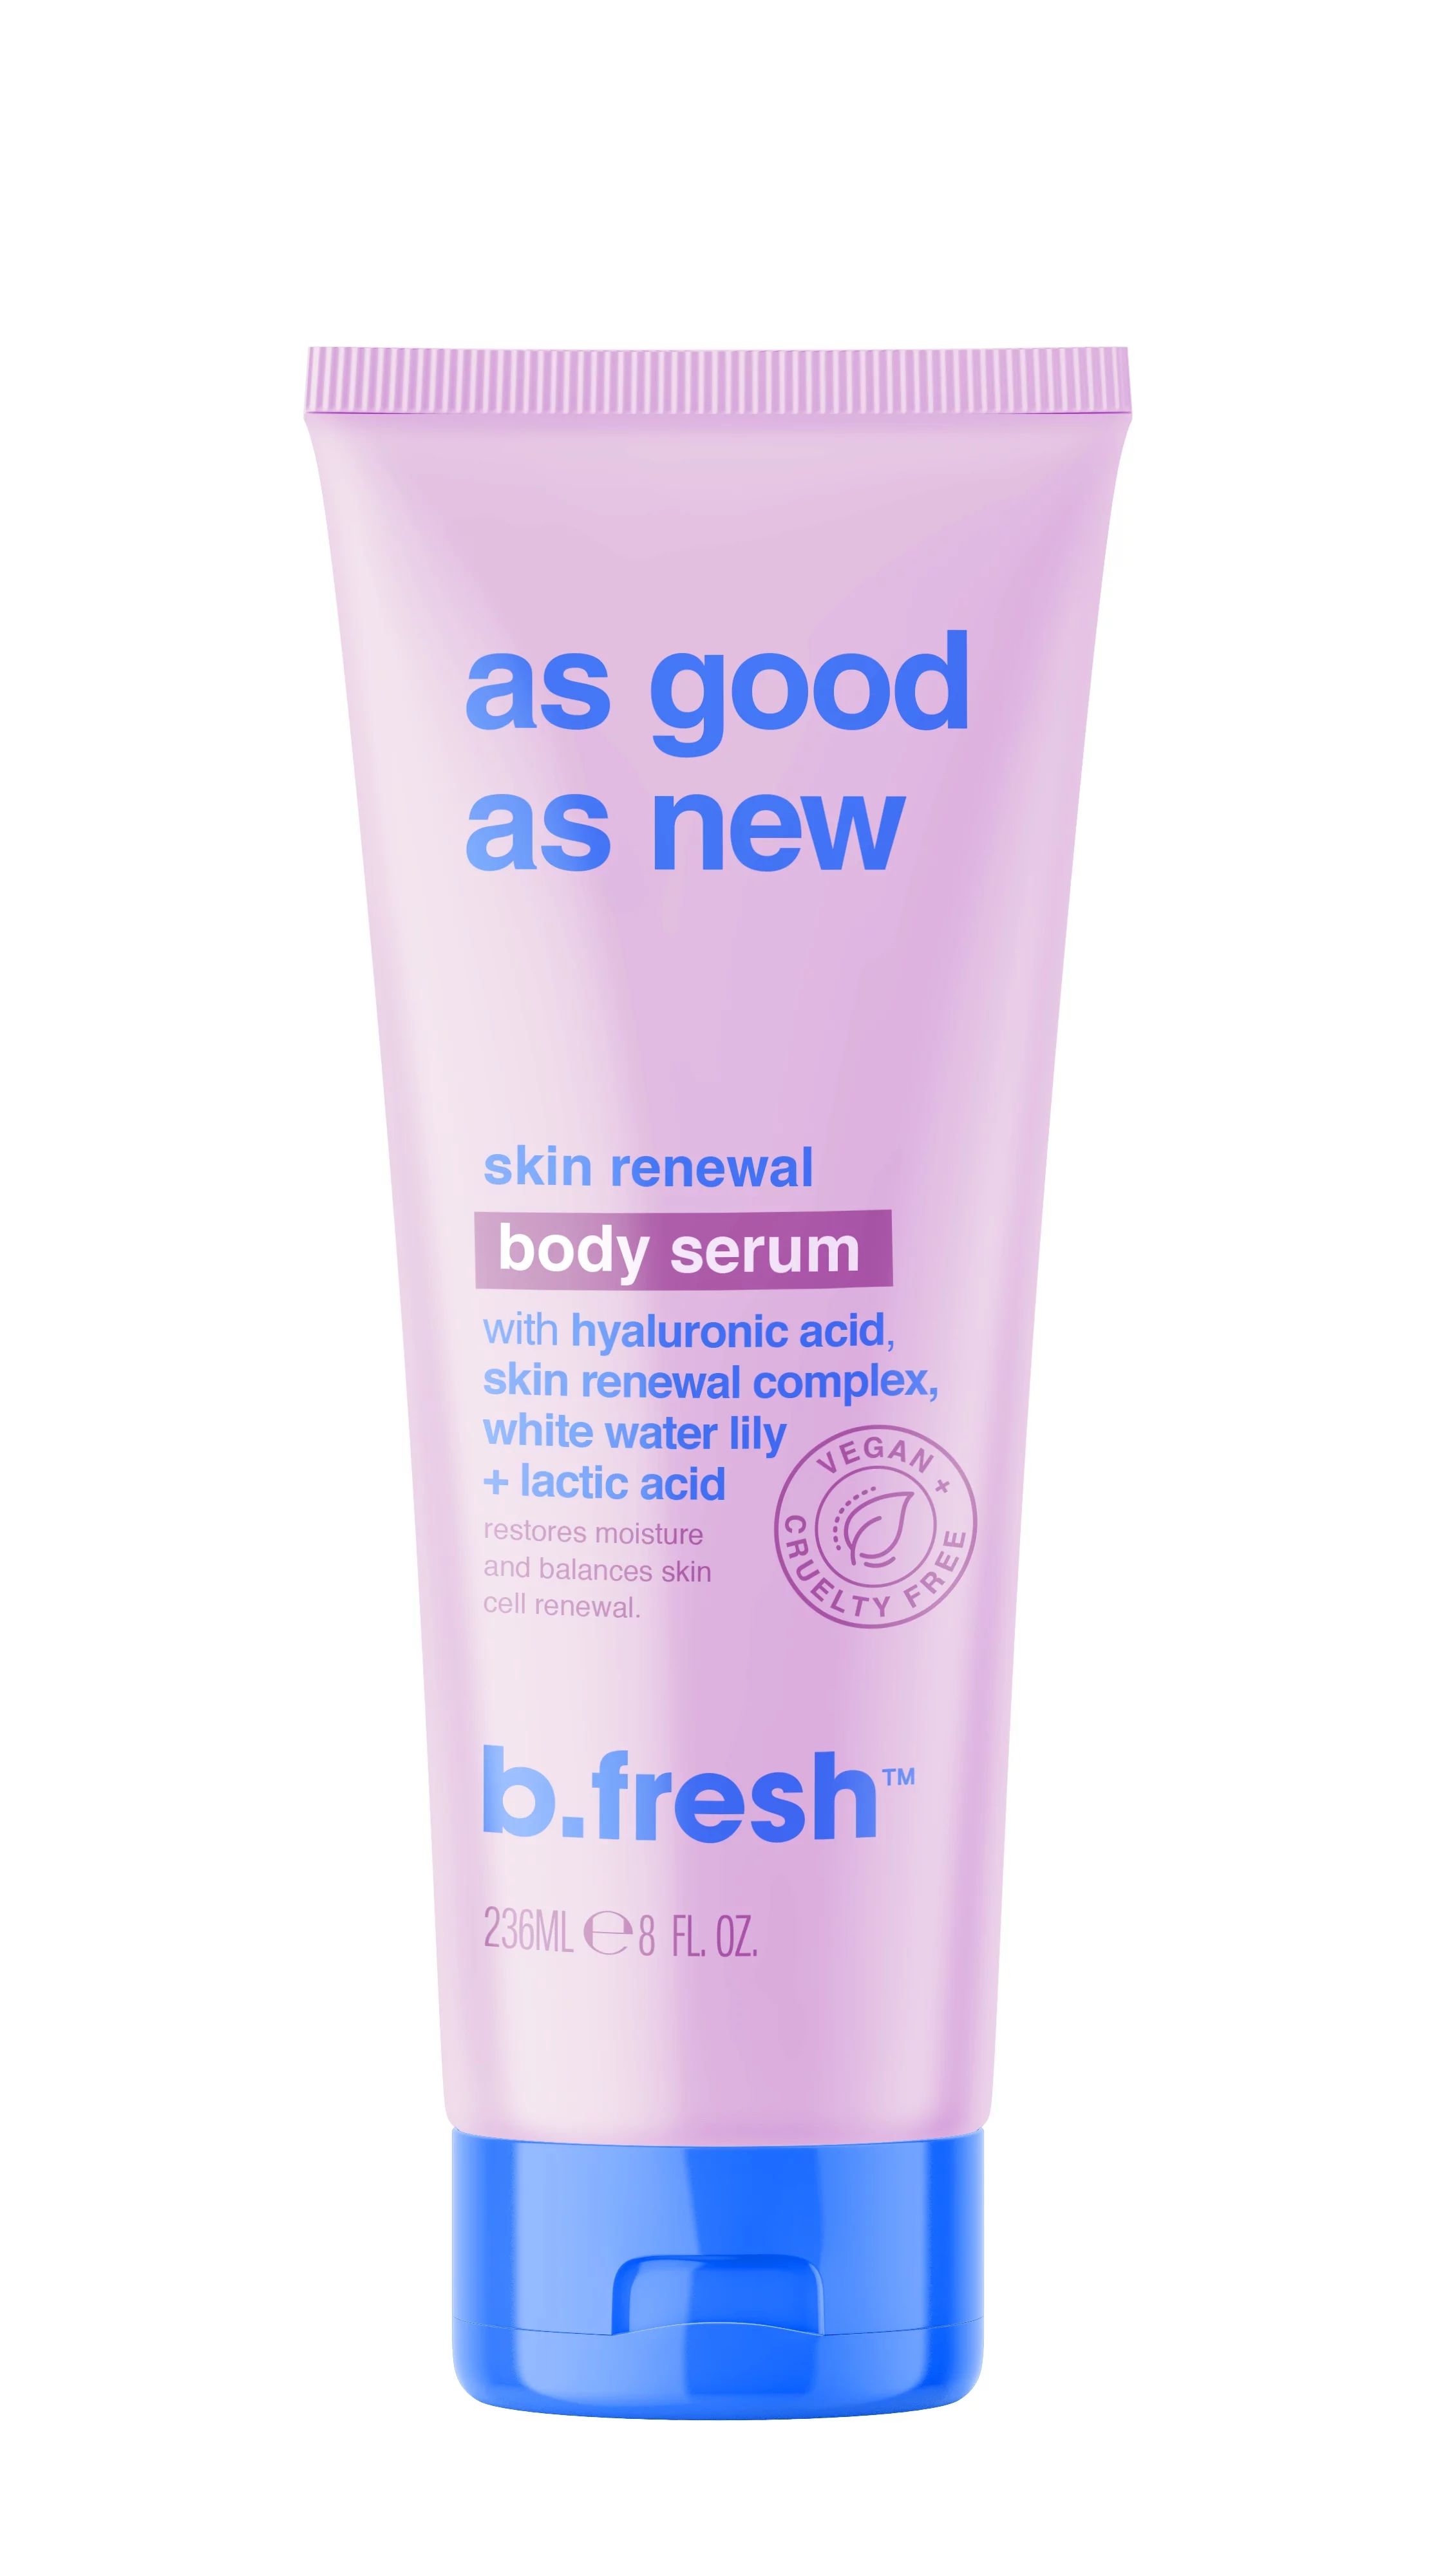 b.fresh as good as new skin renewal body serum | Walmart (US)